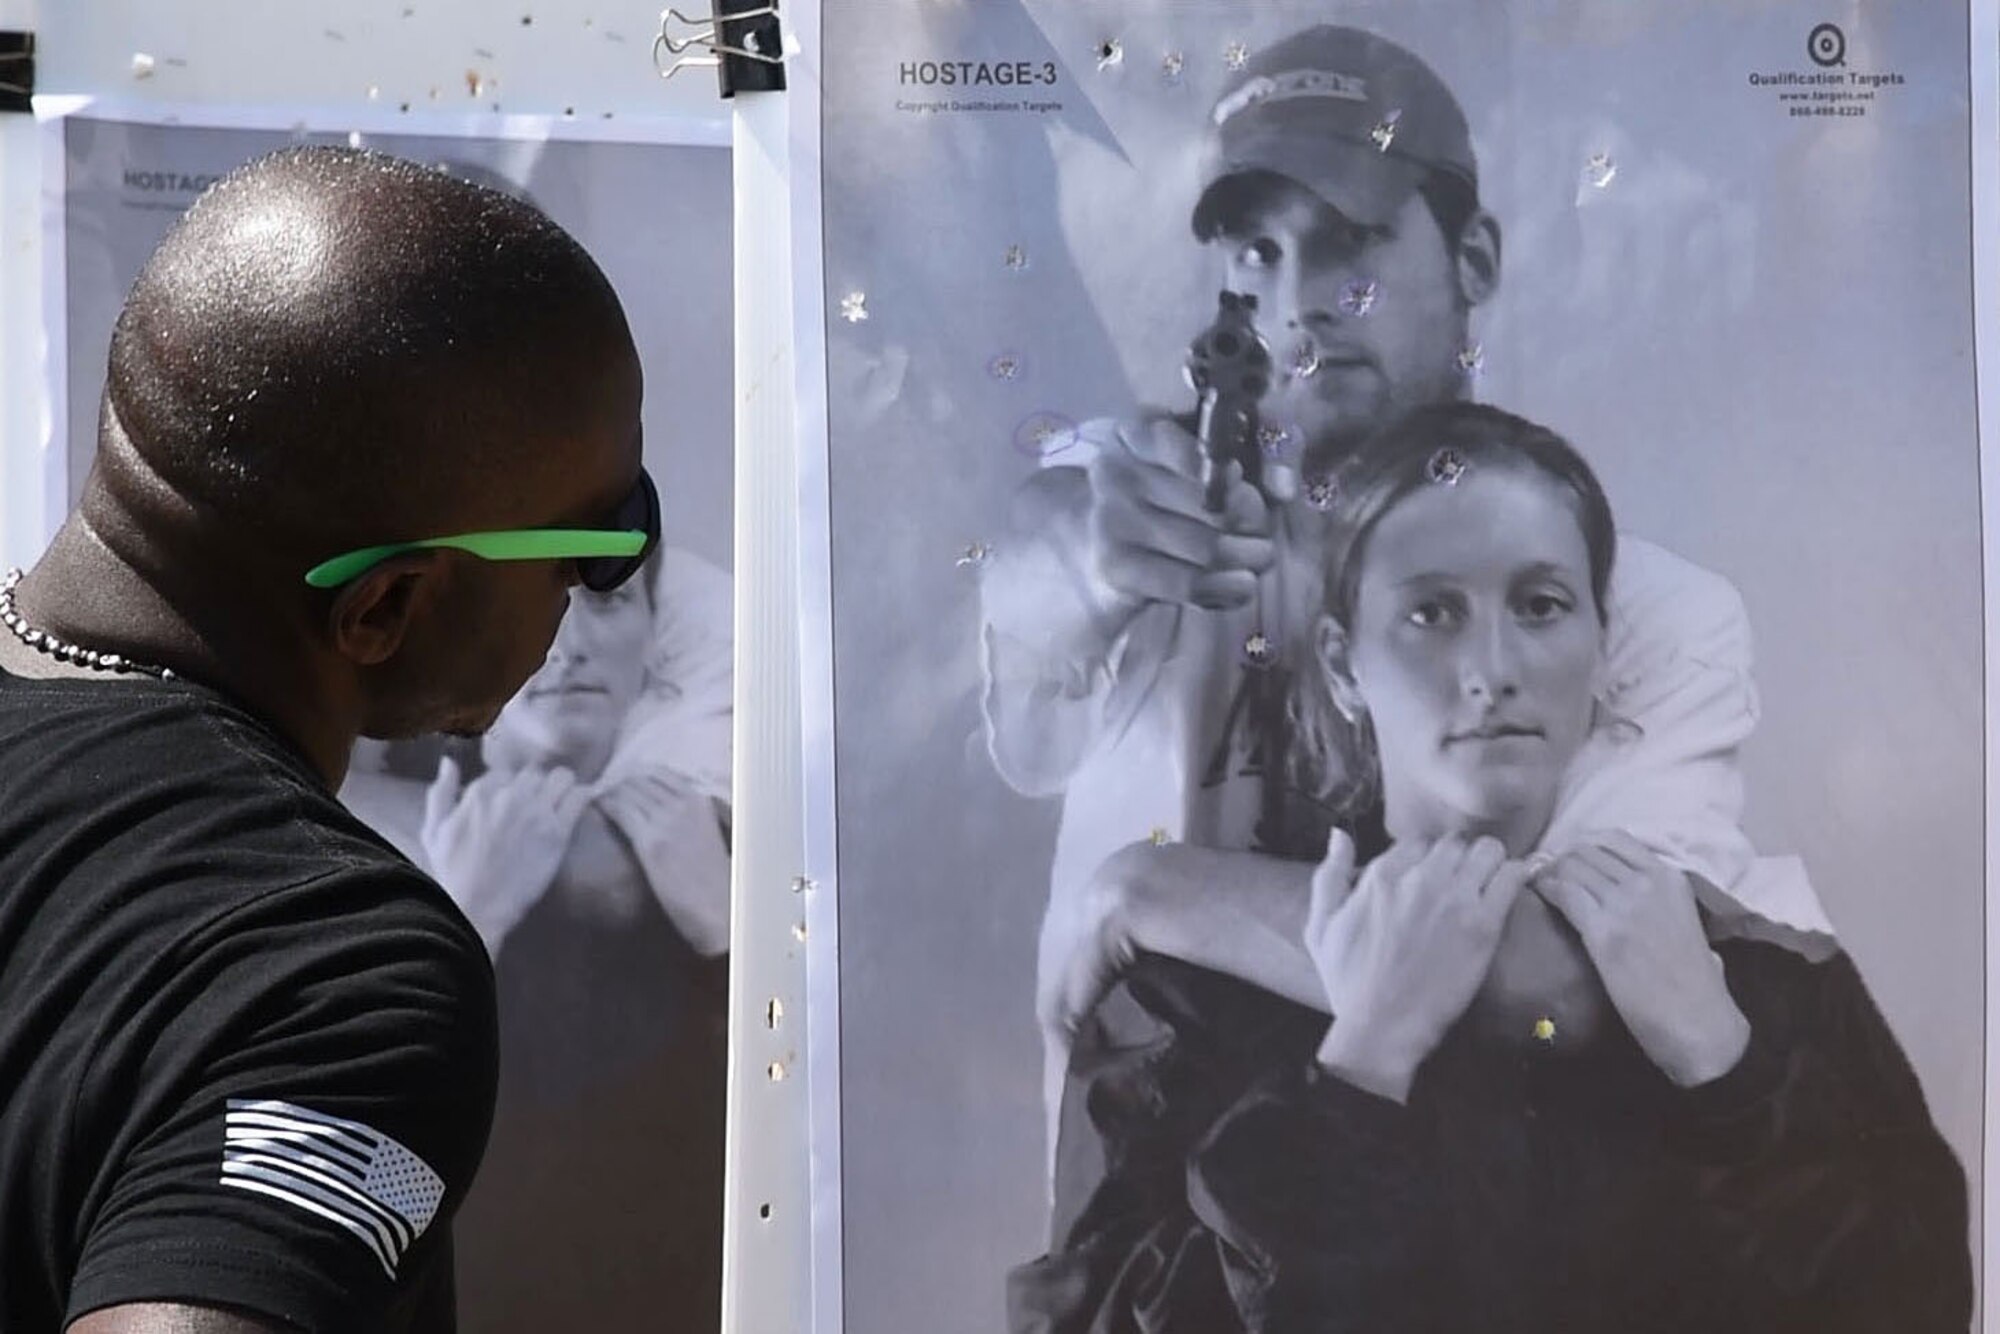 Man looks at target he shot.